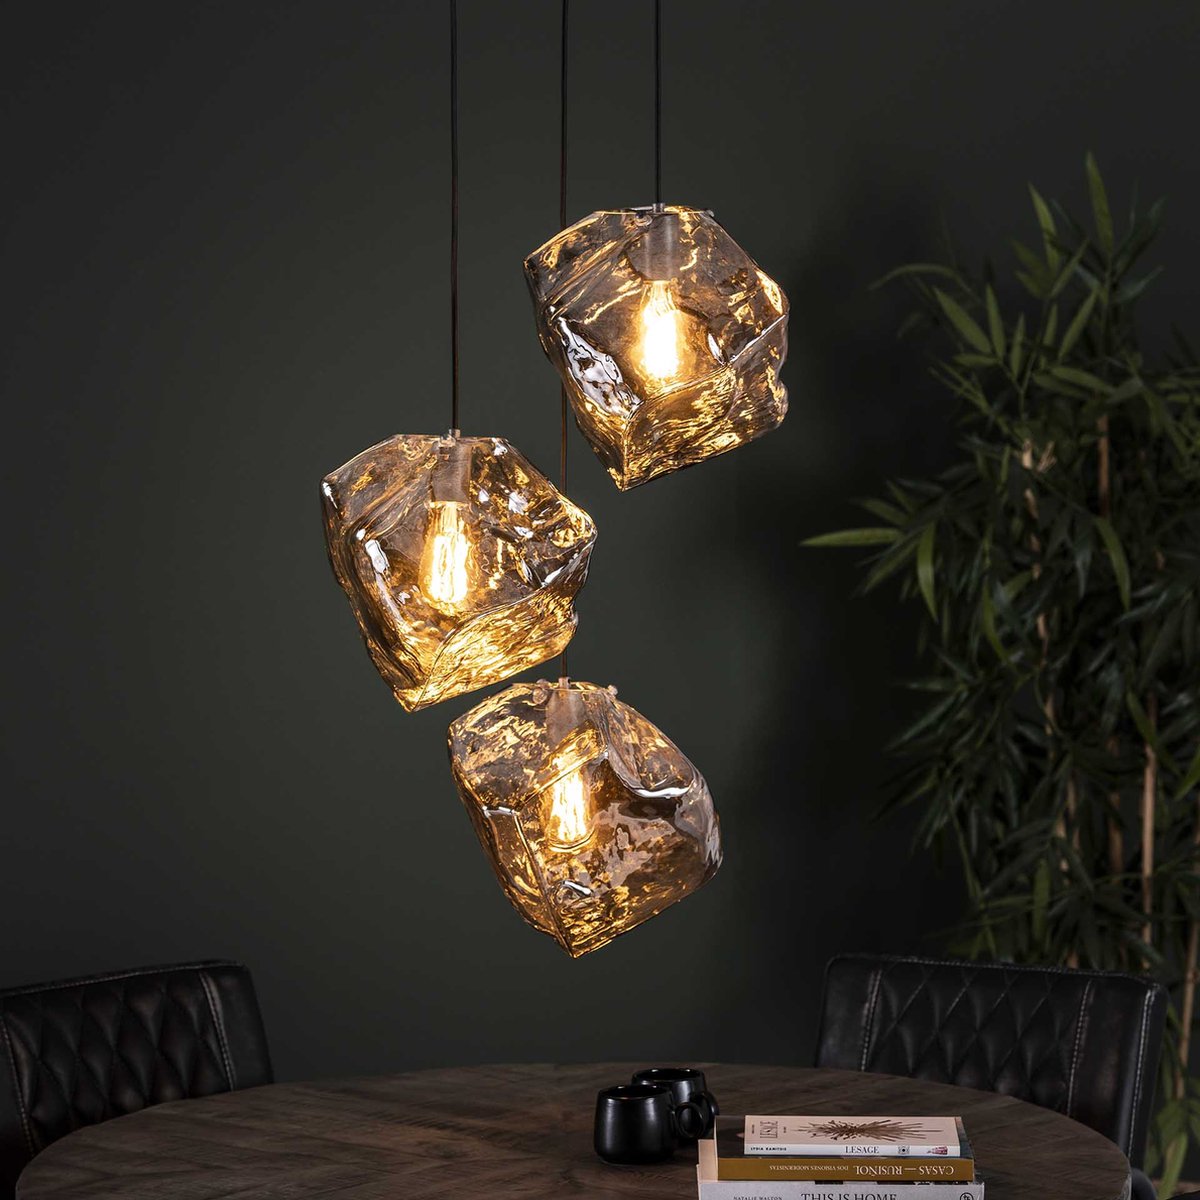 Hanglamp Rock getrapt | 3 lichts | charcoal / zwart / grijs | chromed glass / metaal | in hoogte verstelbaar tot 150 cm | eetkamer / woonkamer lamp | modern / sfeervol design